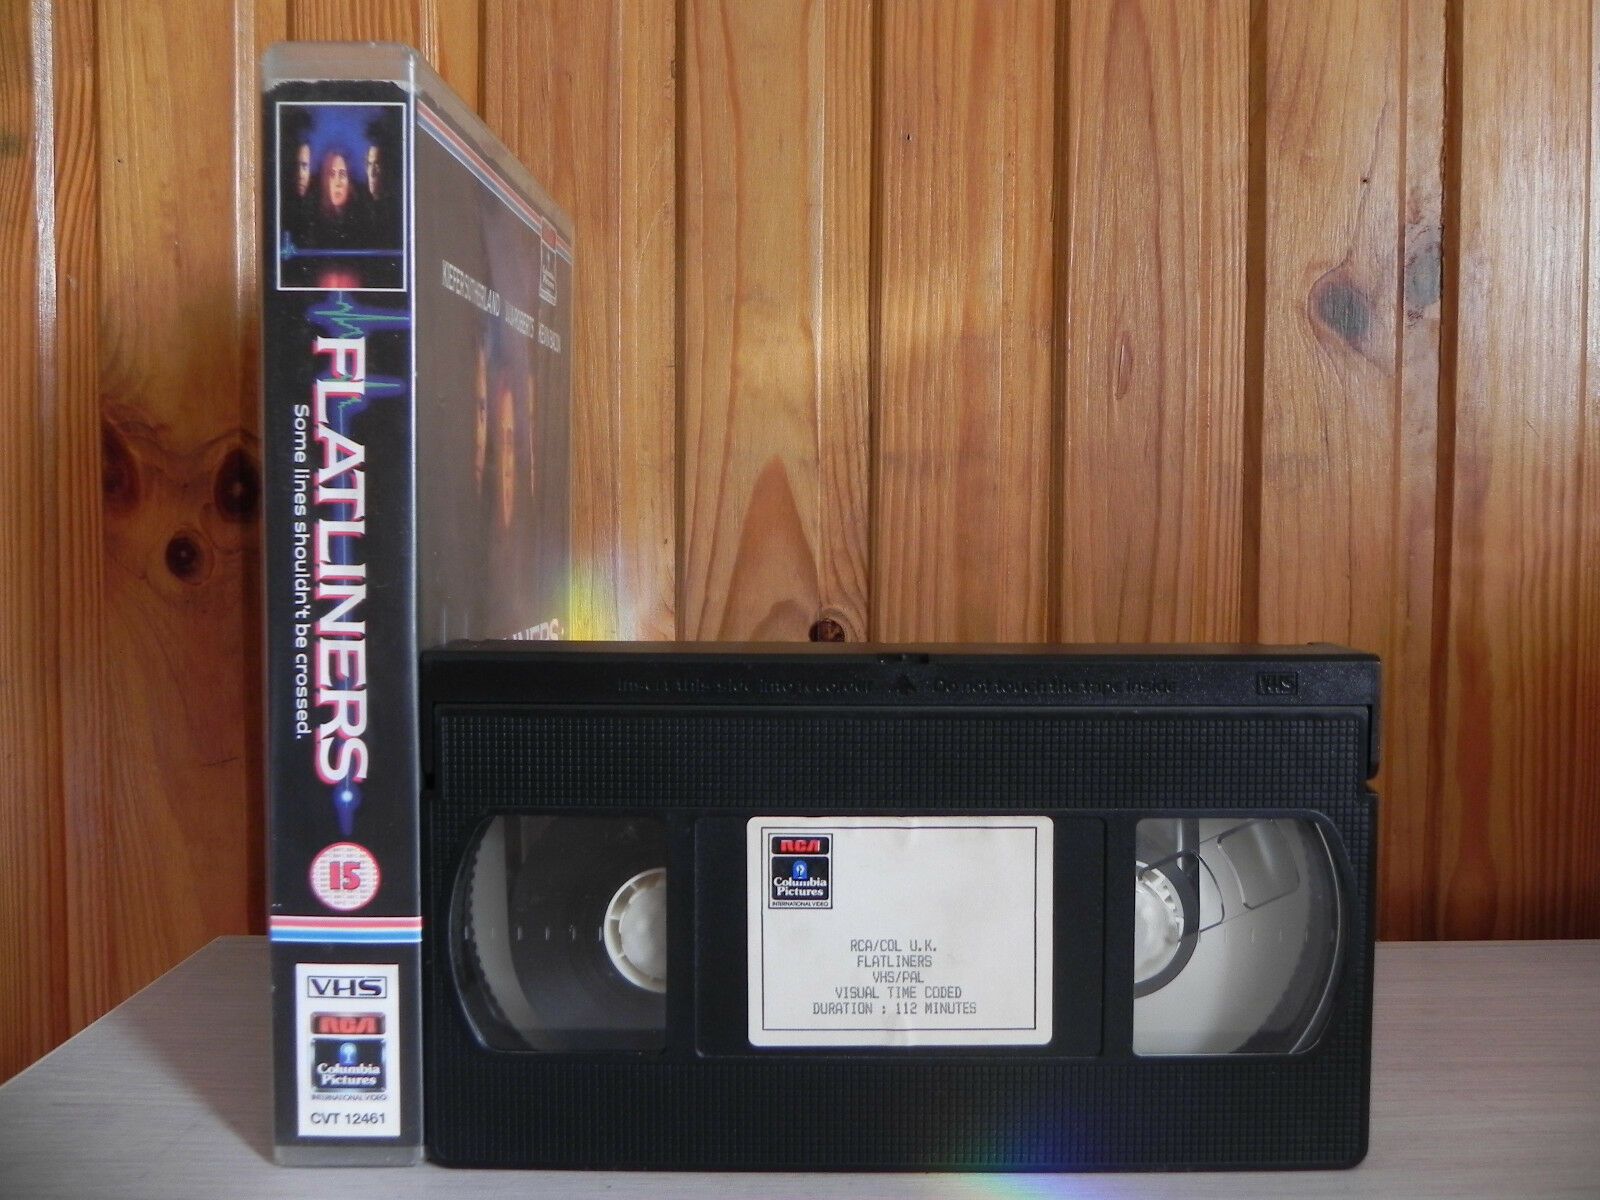 Flatliners - The Original - Time Coded Sample - Drama - Big Box Video - Pal VHS-